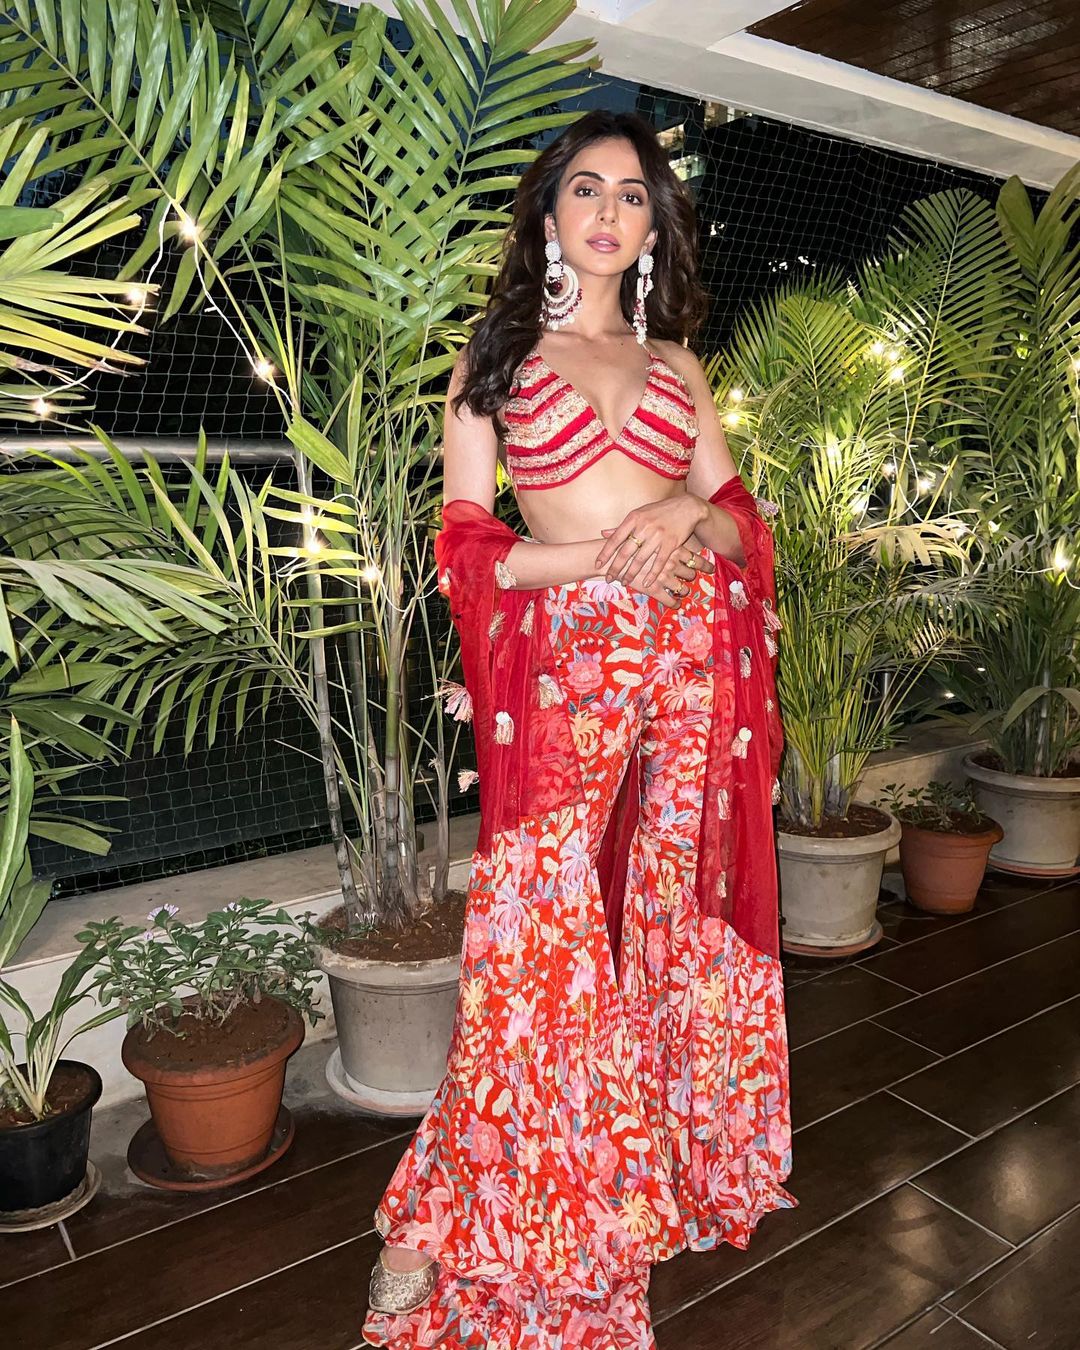 rakul preet singh hot photos in glamour dress getting viral